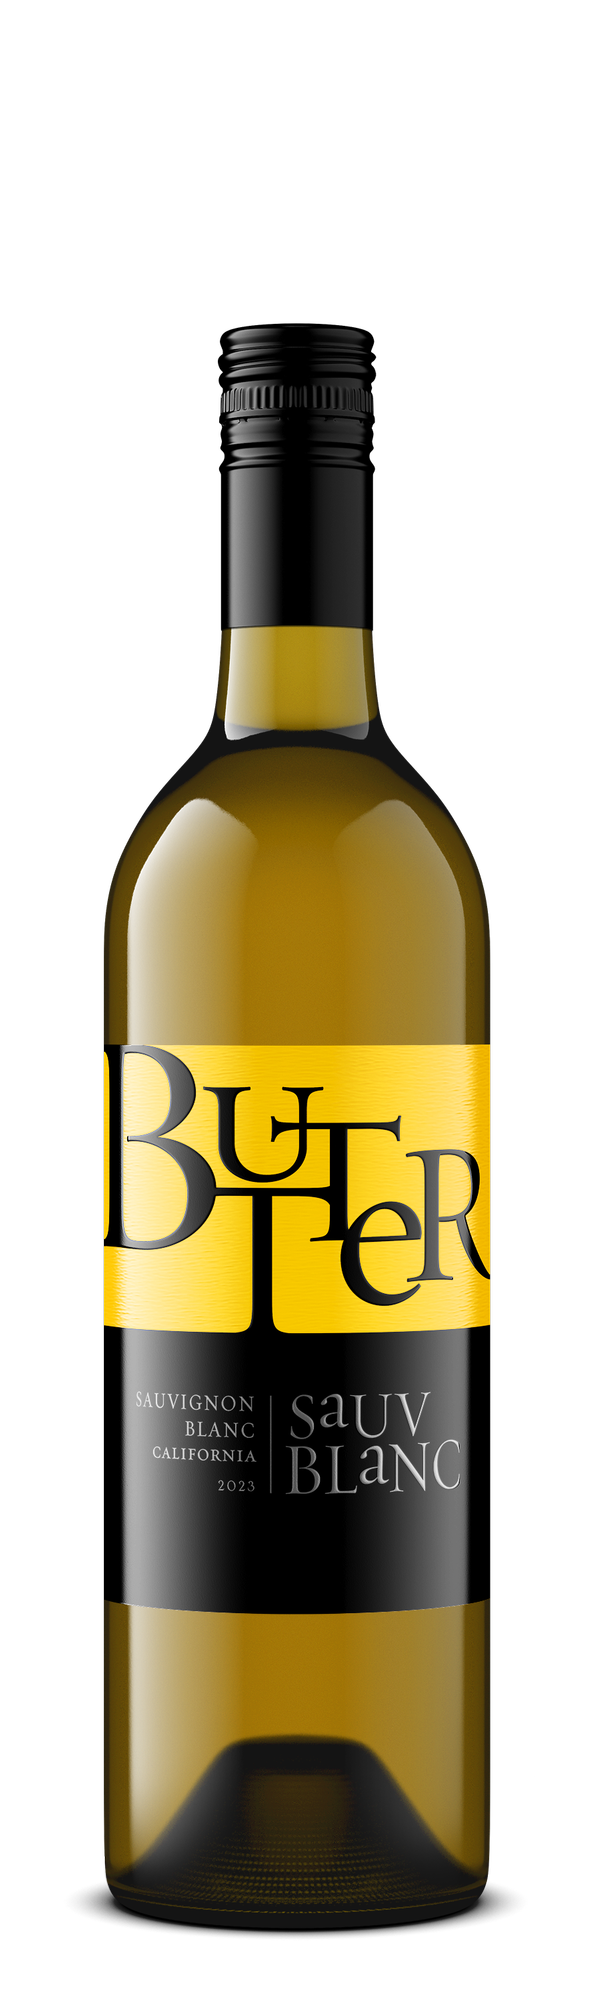 2023 Butter Sauvignon Blanc, California